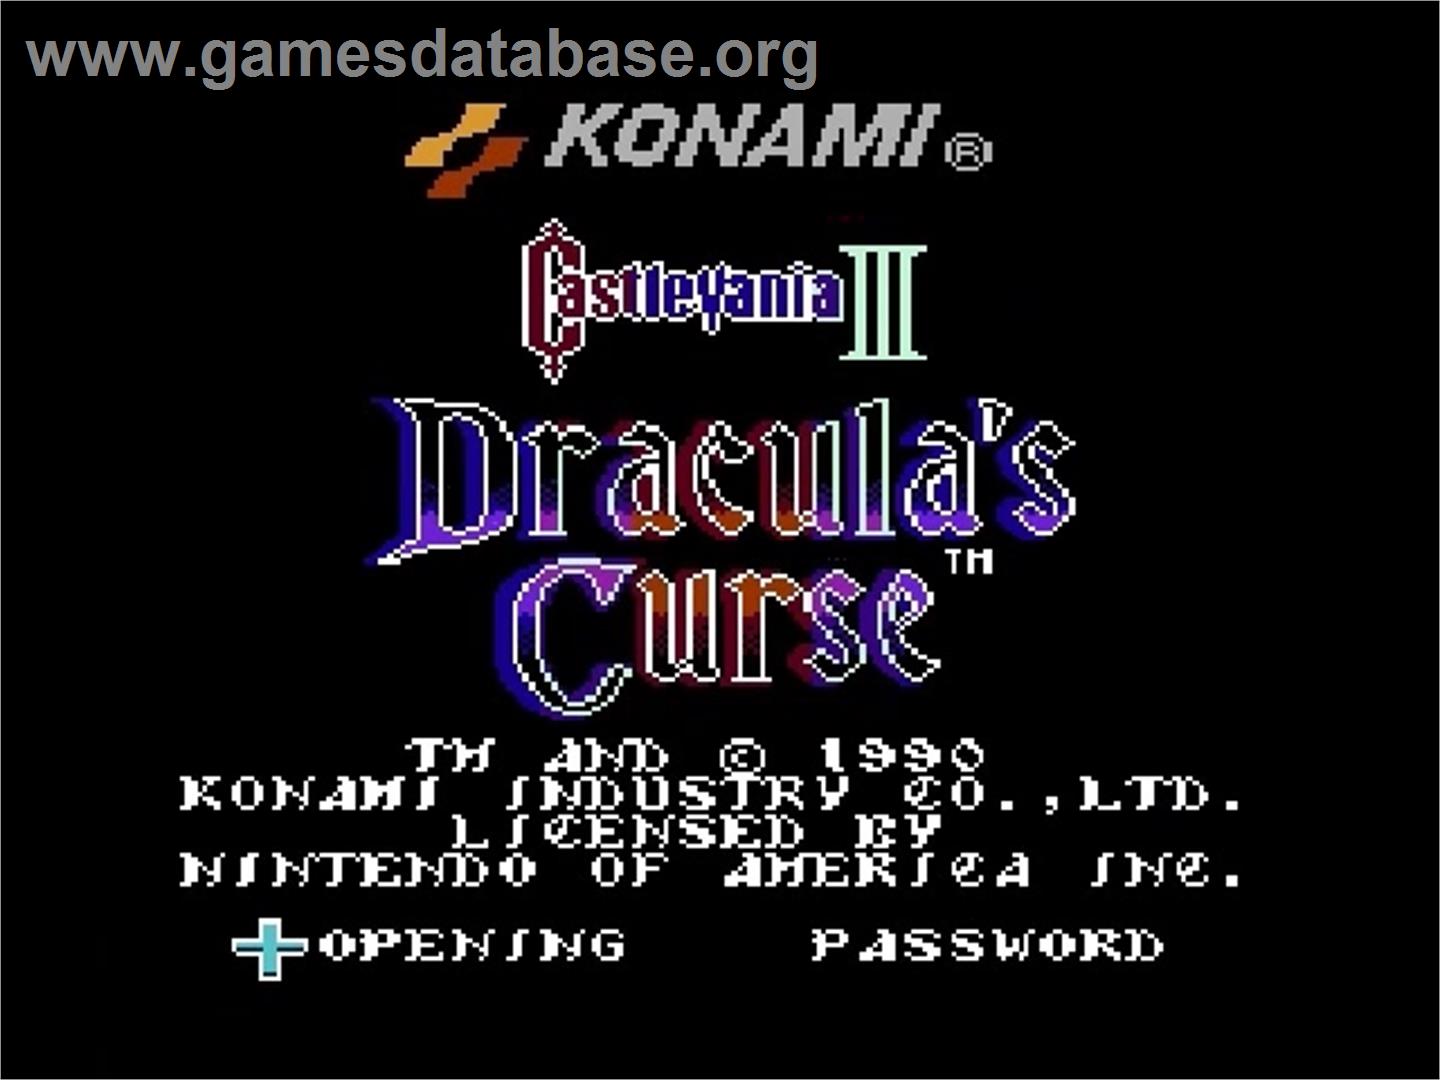 Castlevania III: Dracula's Curse - Nintendo NES - Artwork - Title Screen